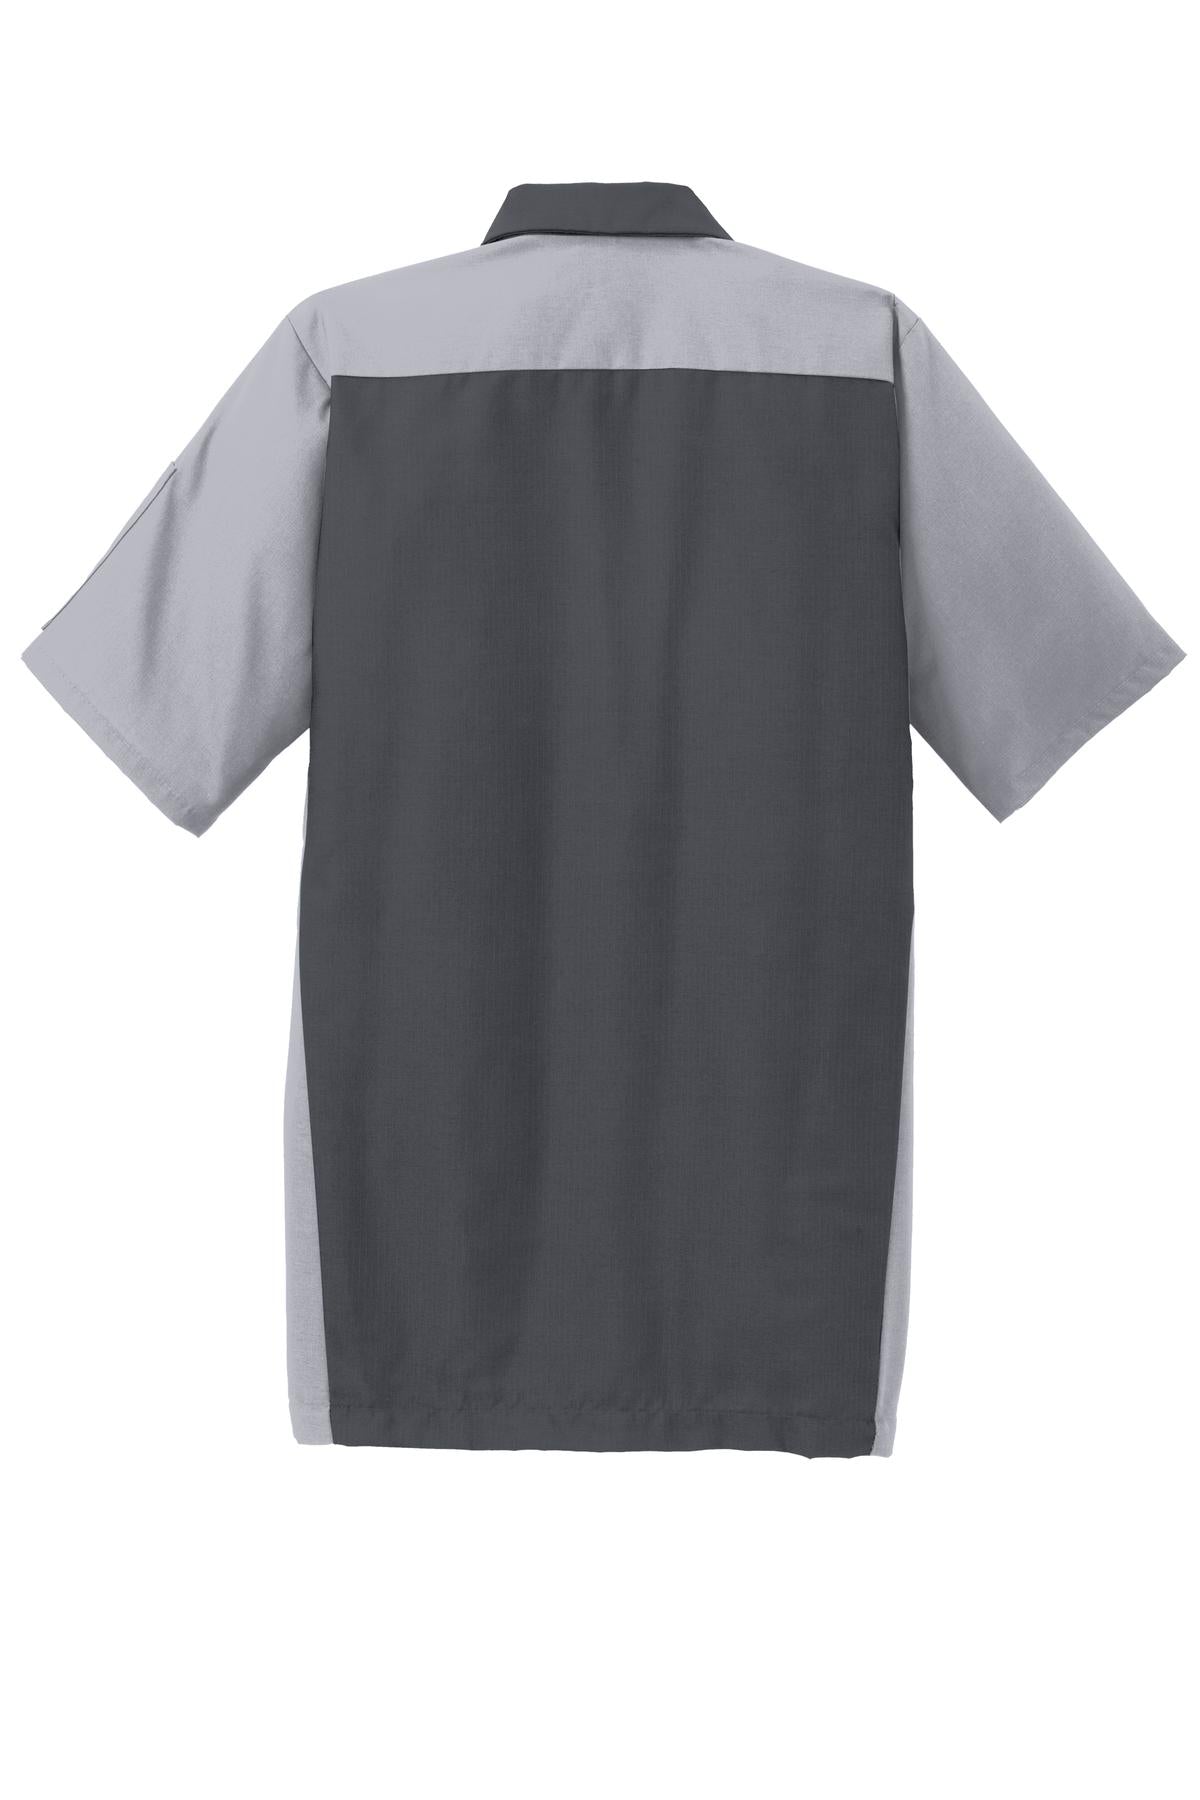 Red Kap Short Sleeve Ripstop Crew Shirt. SY20 - BT Imprintables Shirts